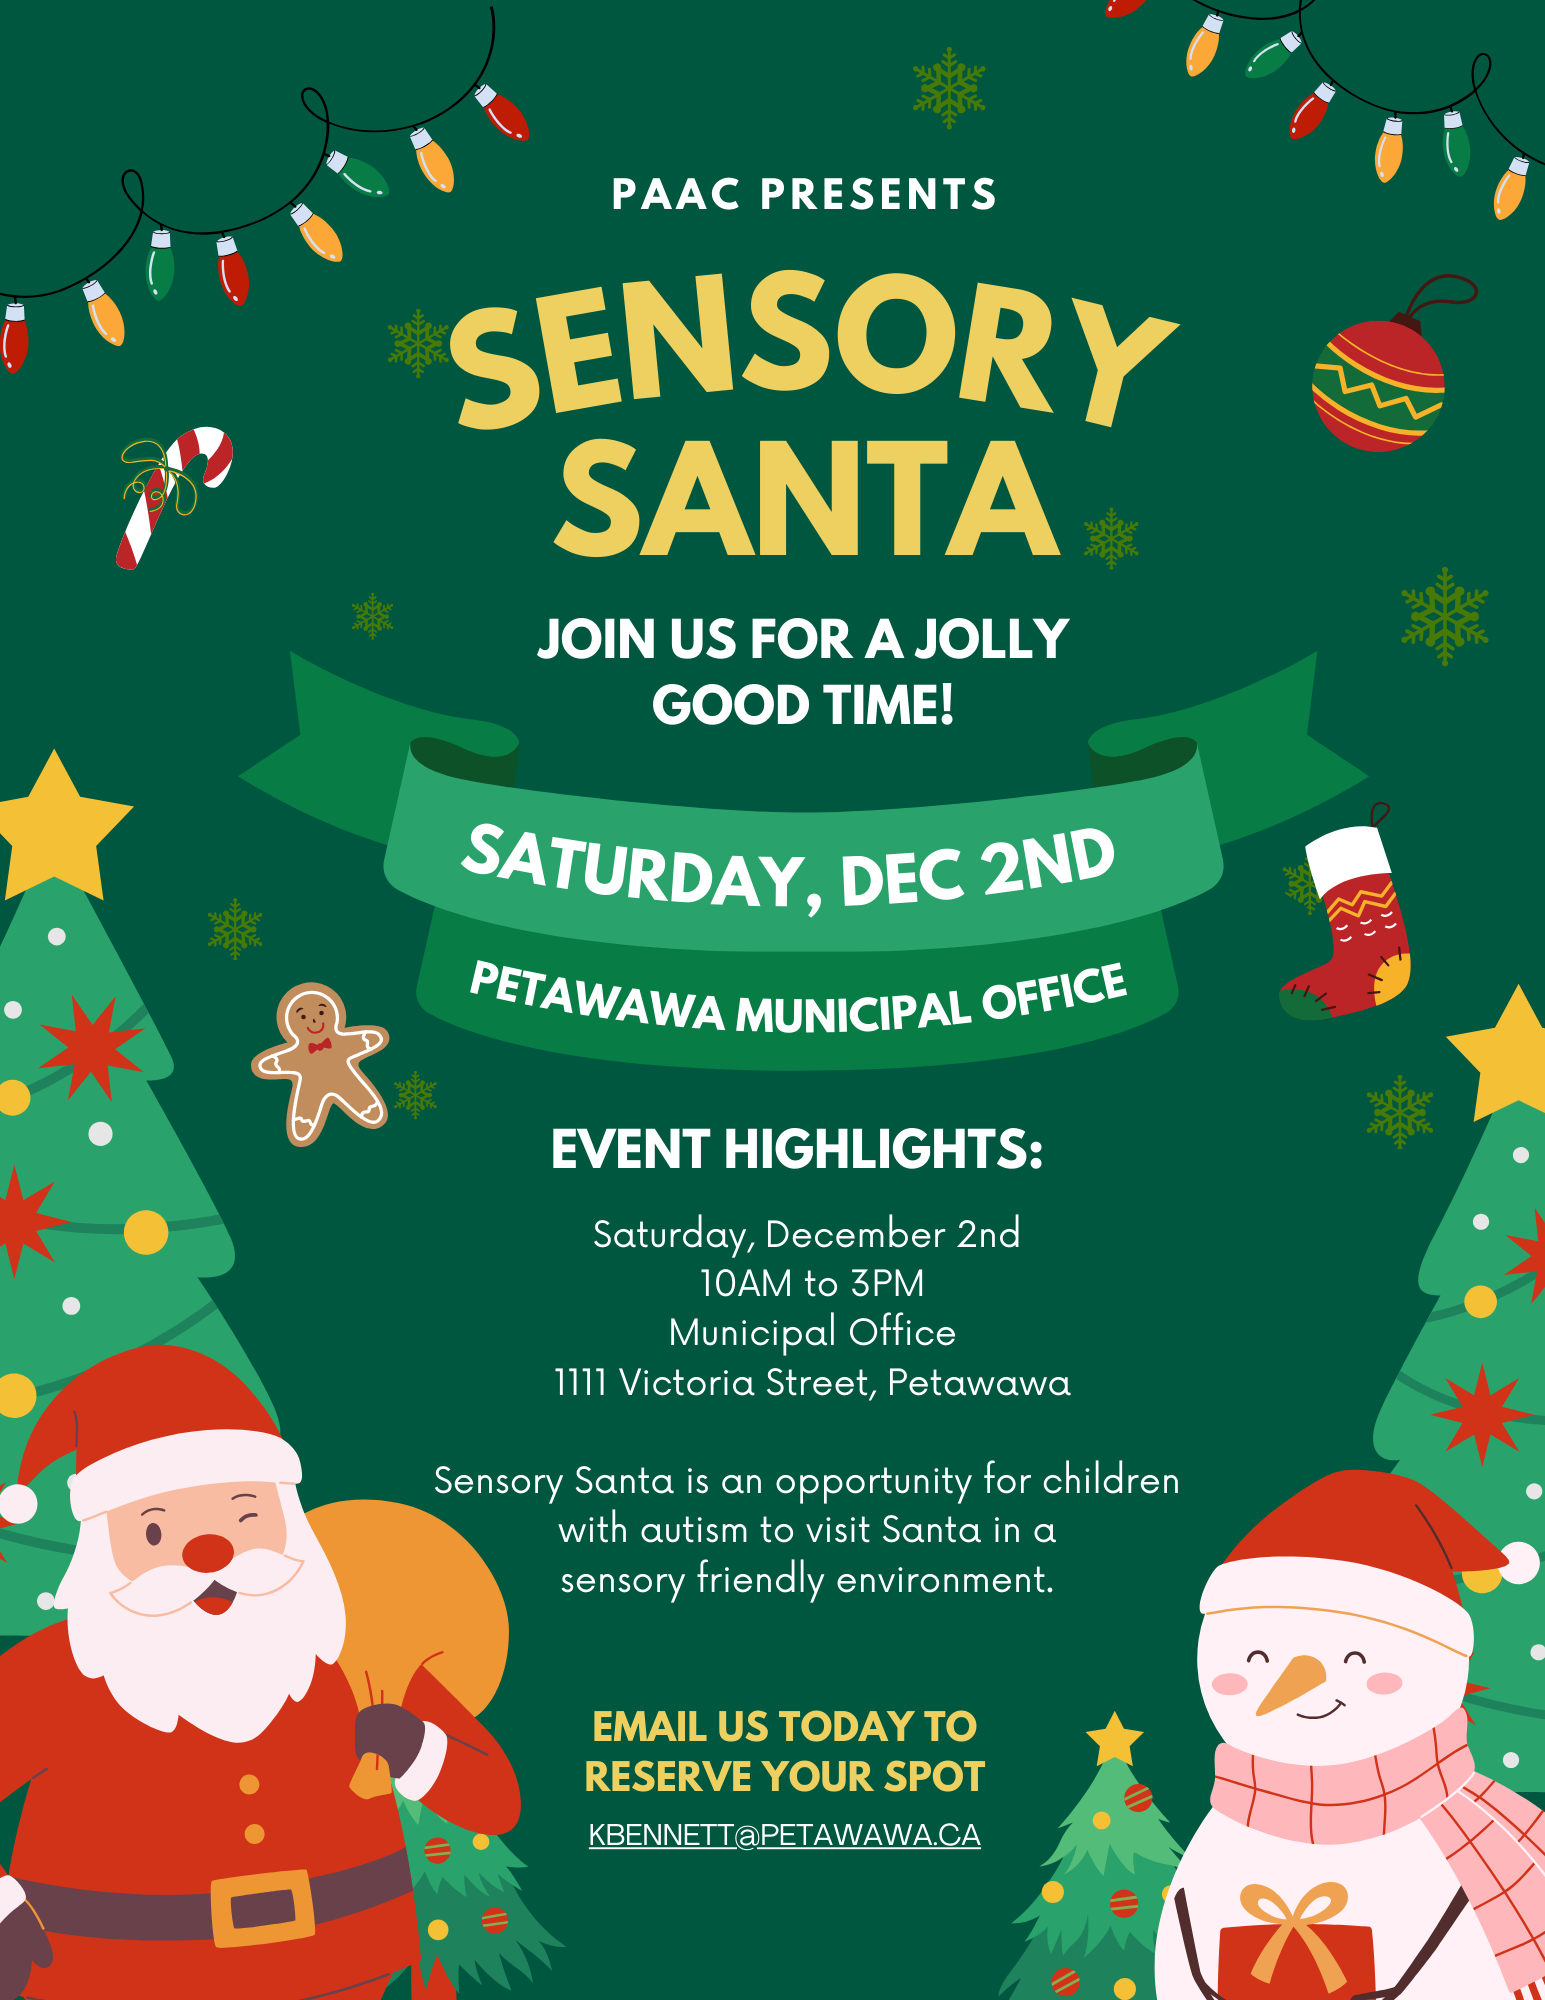 sensory santa poster, paac event, meet santa